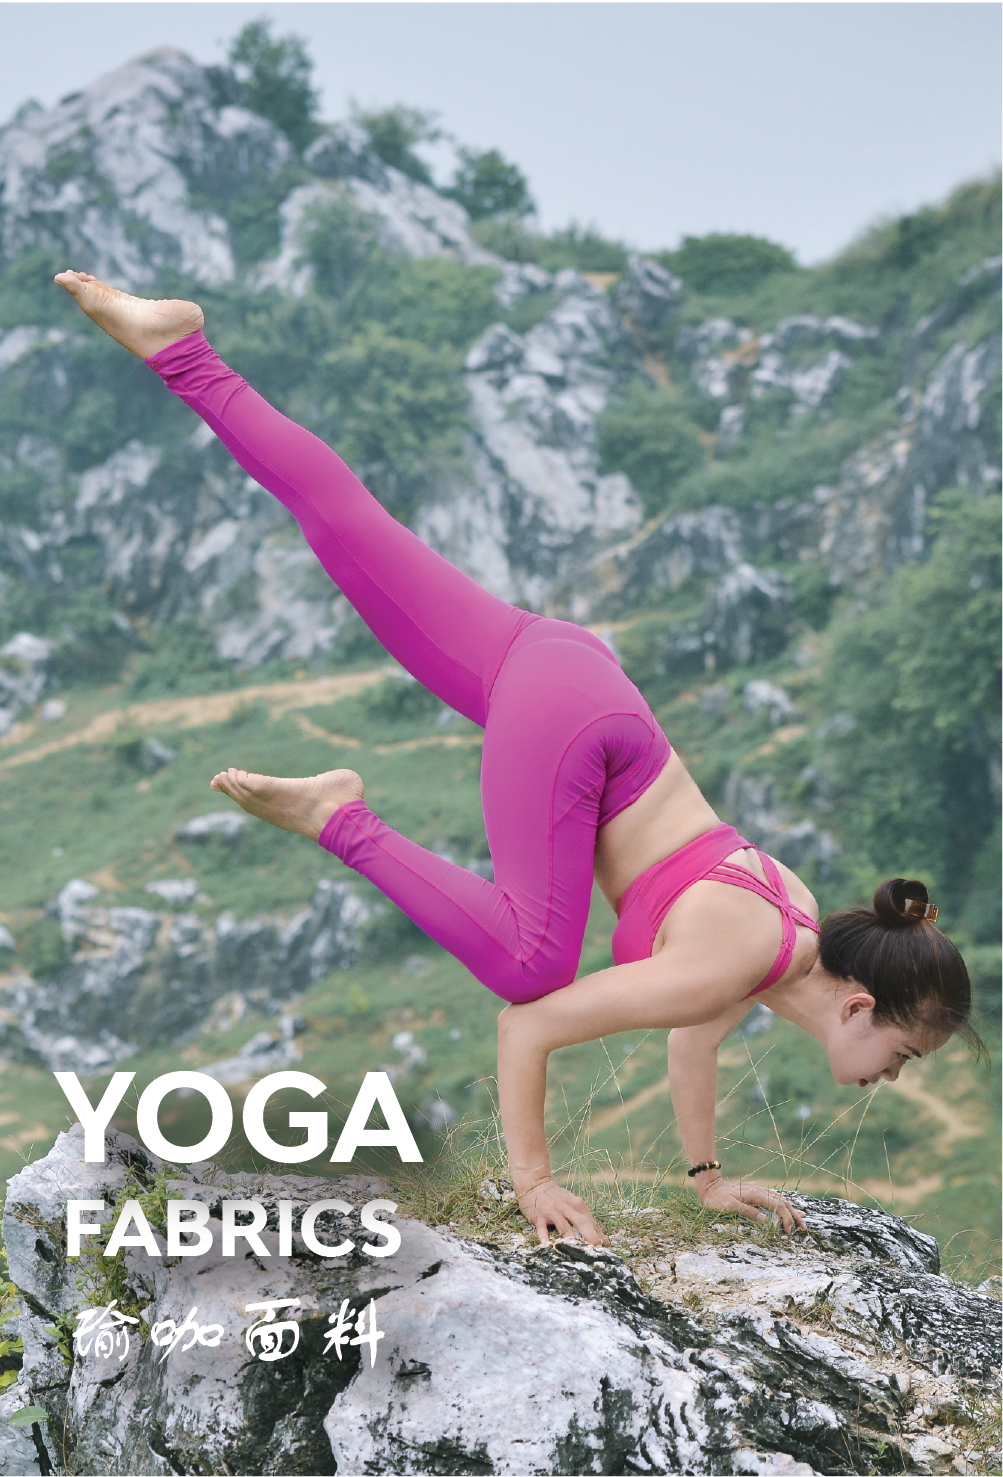 Yoga web poster